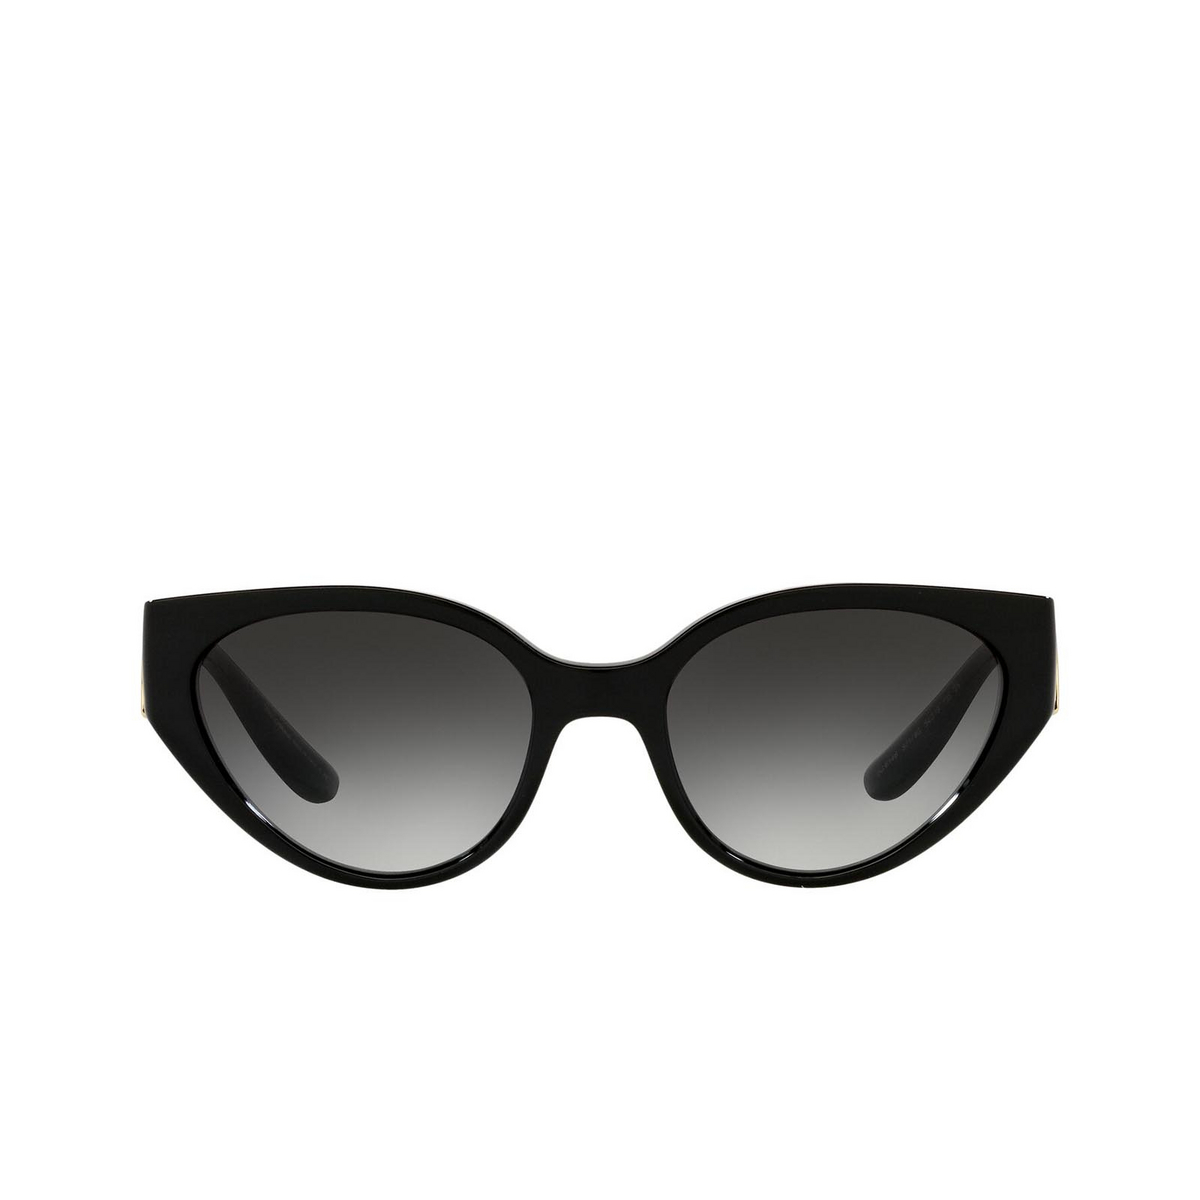 Dolce & Gabbana® Cat-eye Sunglasses: DG6146 color Black 501/8G - front view.